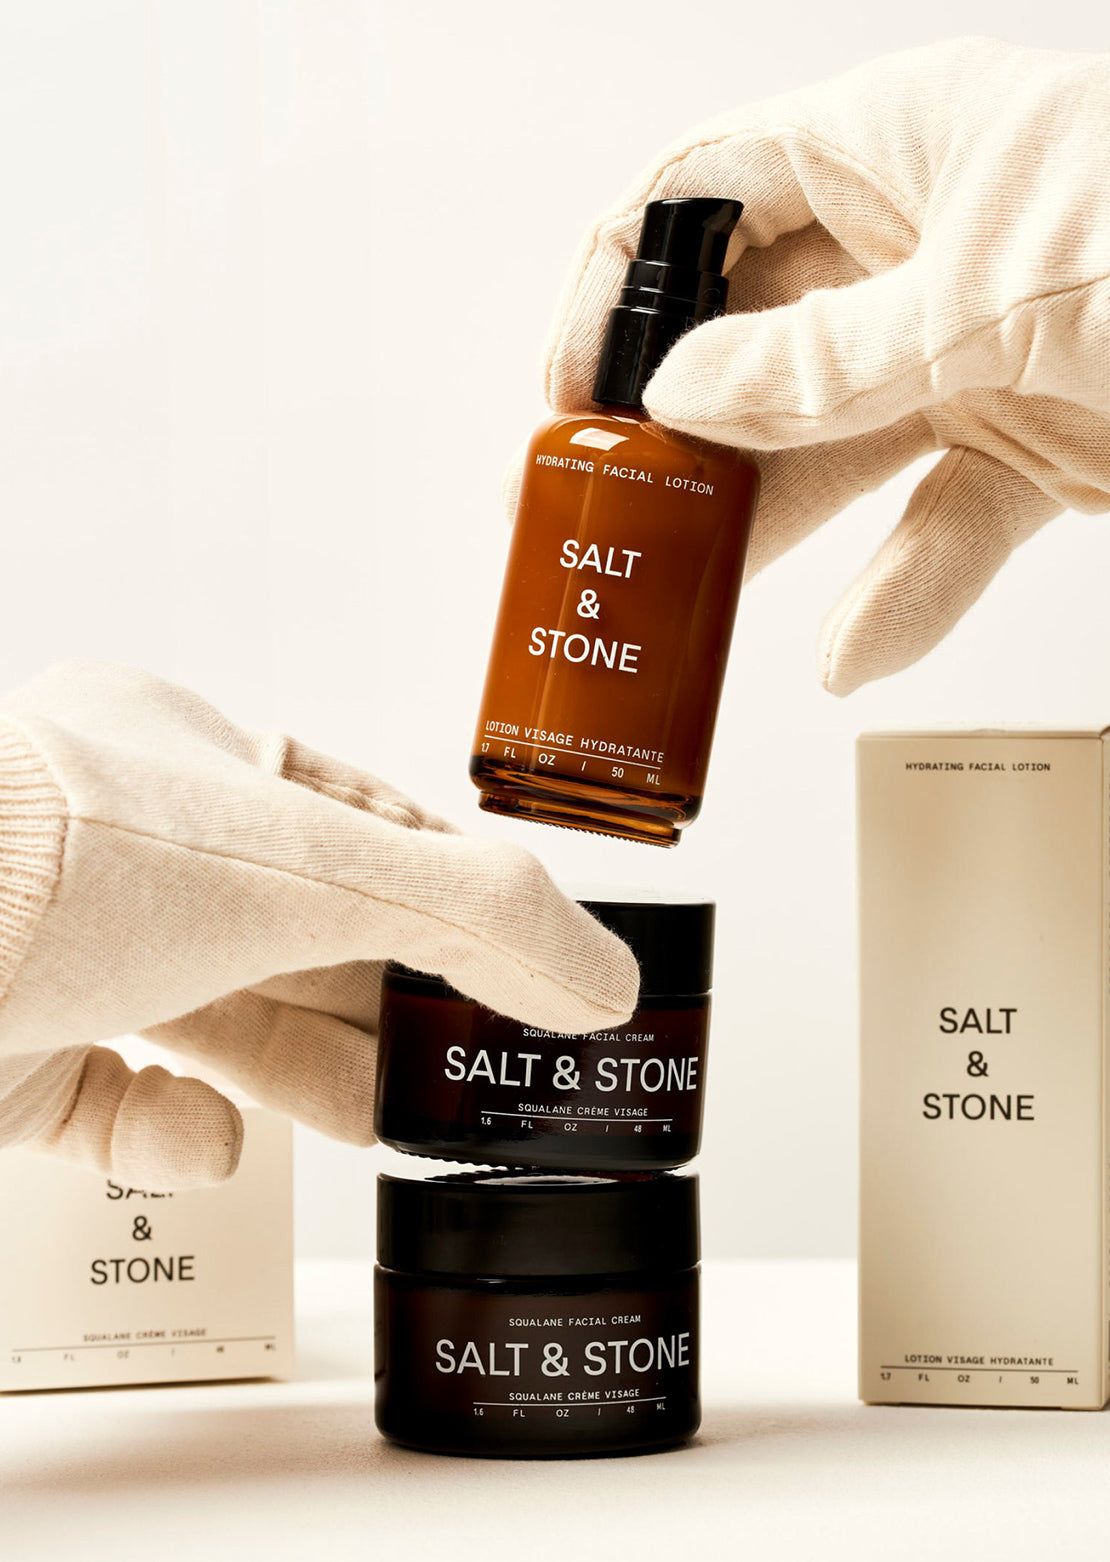 Salt &amp; Stone Hydrating Facial Lotion - 50 ML